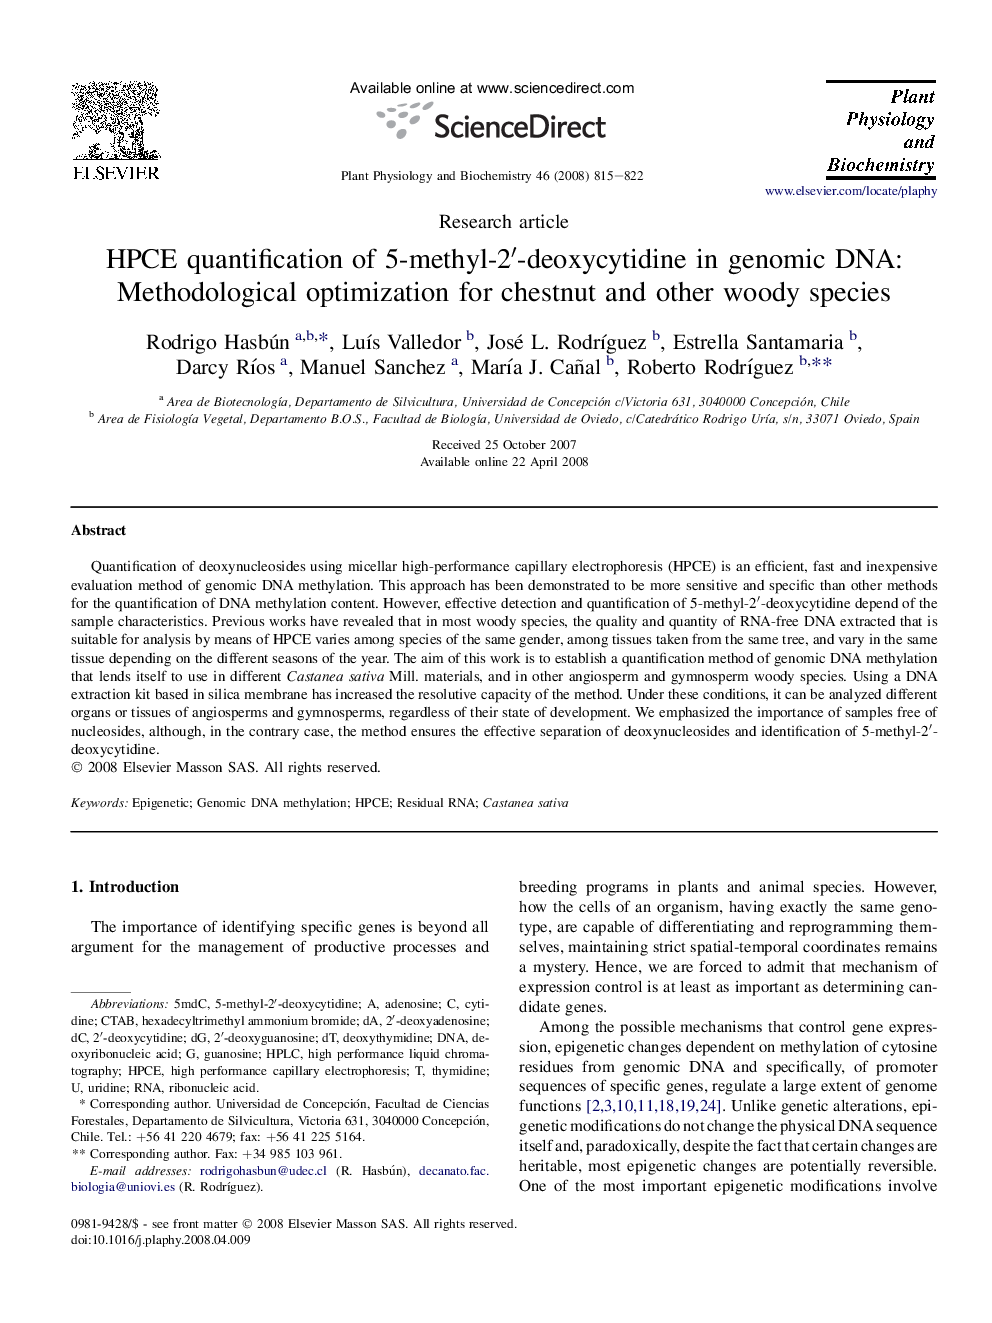 HPCE quantification of 5-methyl-2â²-deoxycytidine in genomic DNA: Methodological optimization for chestnut and other woody species